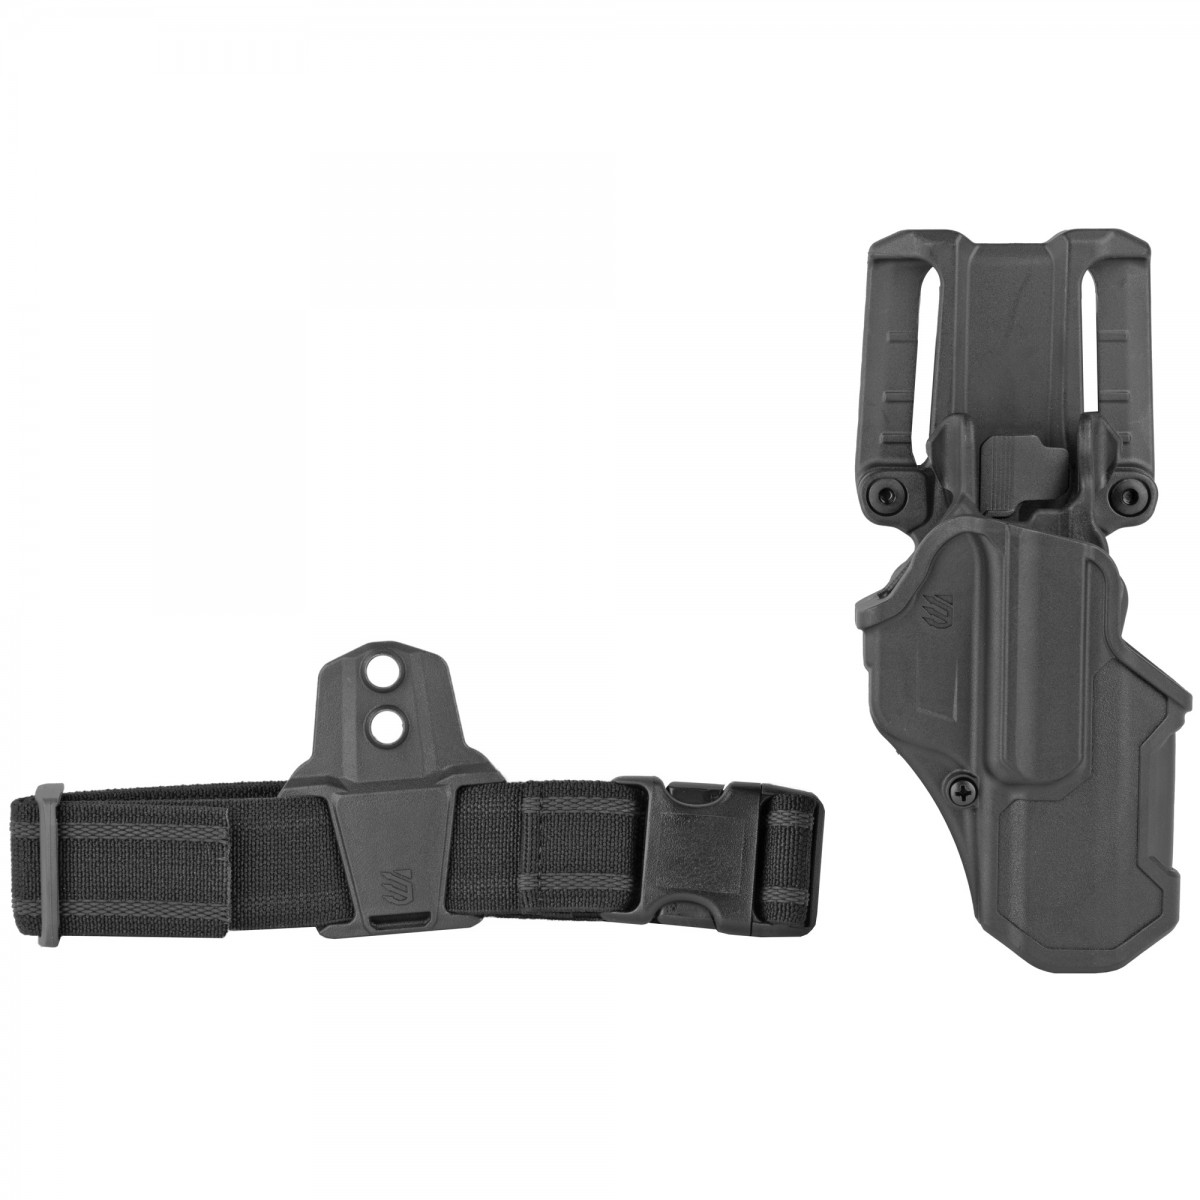 Buy T-Series Jacket Slot Leg Strap Adapter And More | Blackhawk